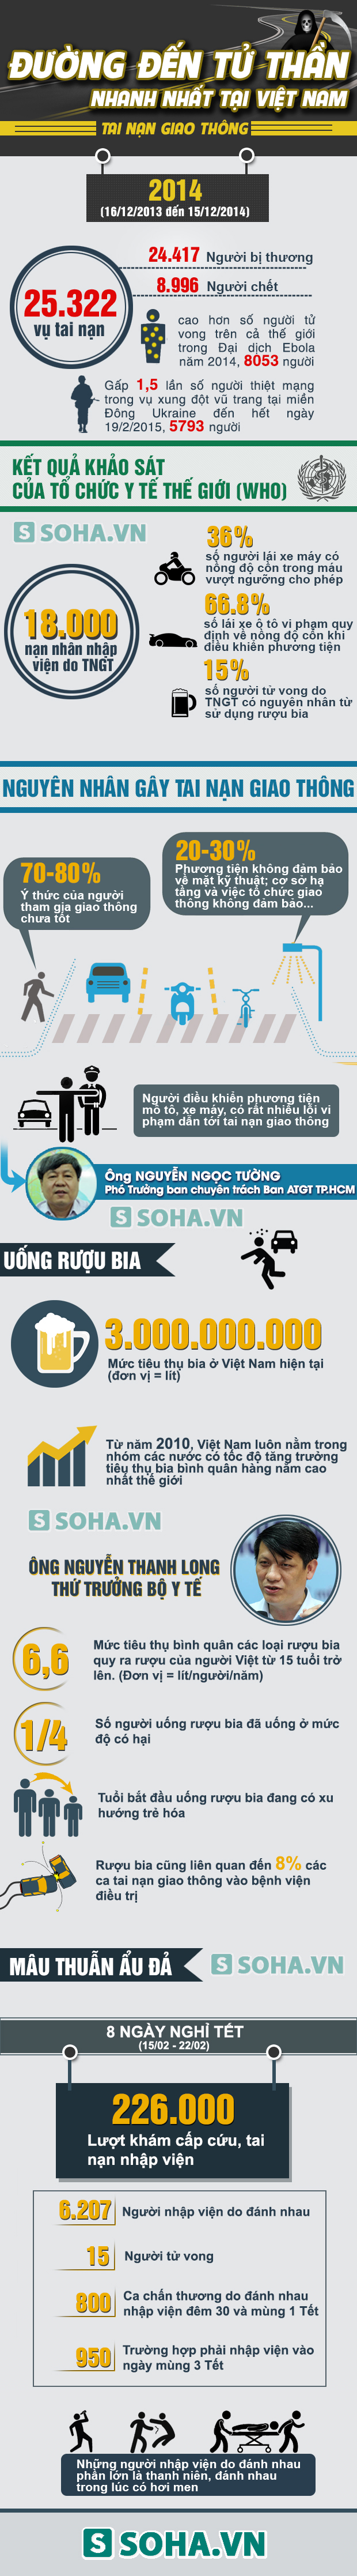 infographic-duong-den-tu-than-nhanh-nhat-o-viet-nam